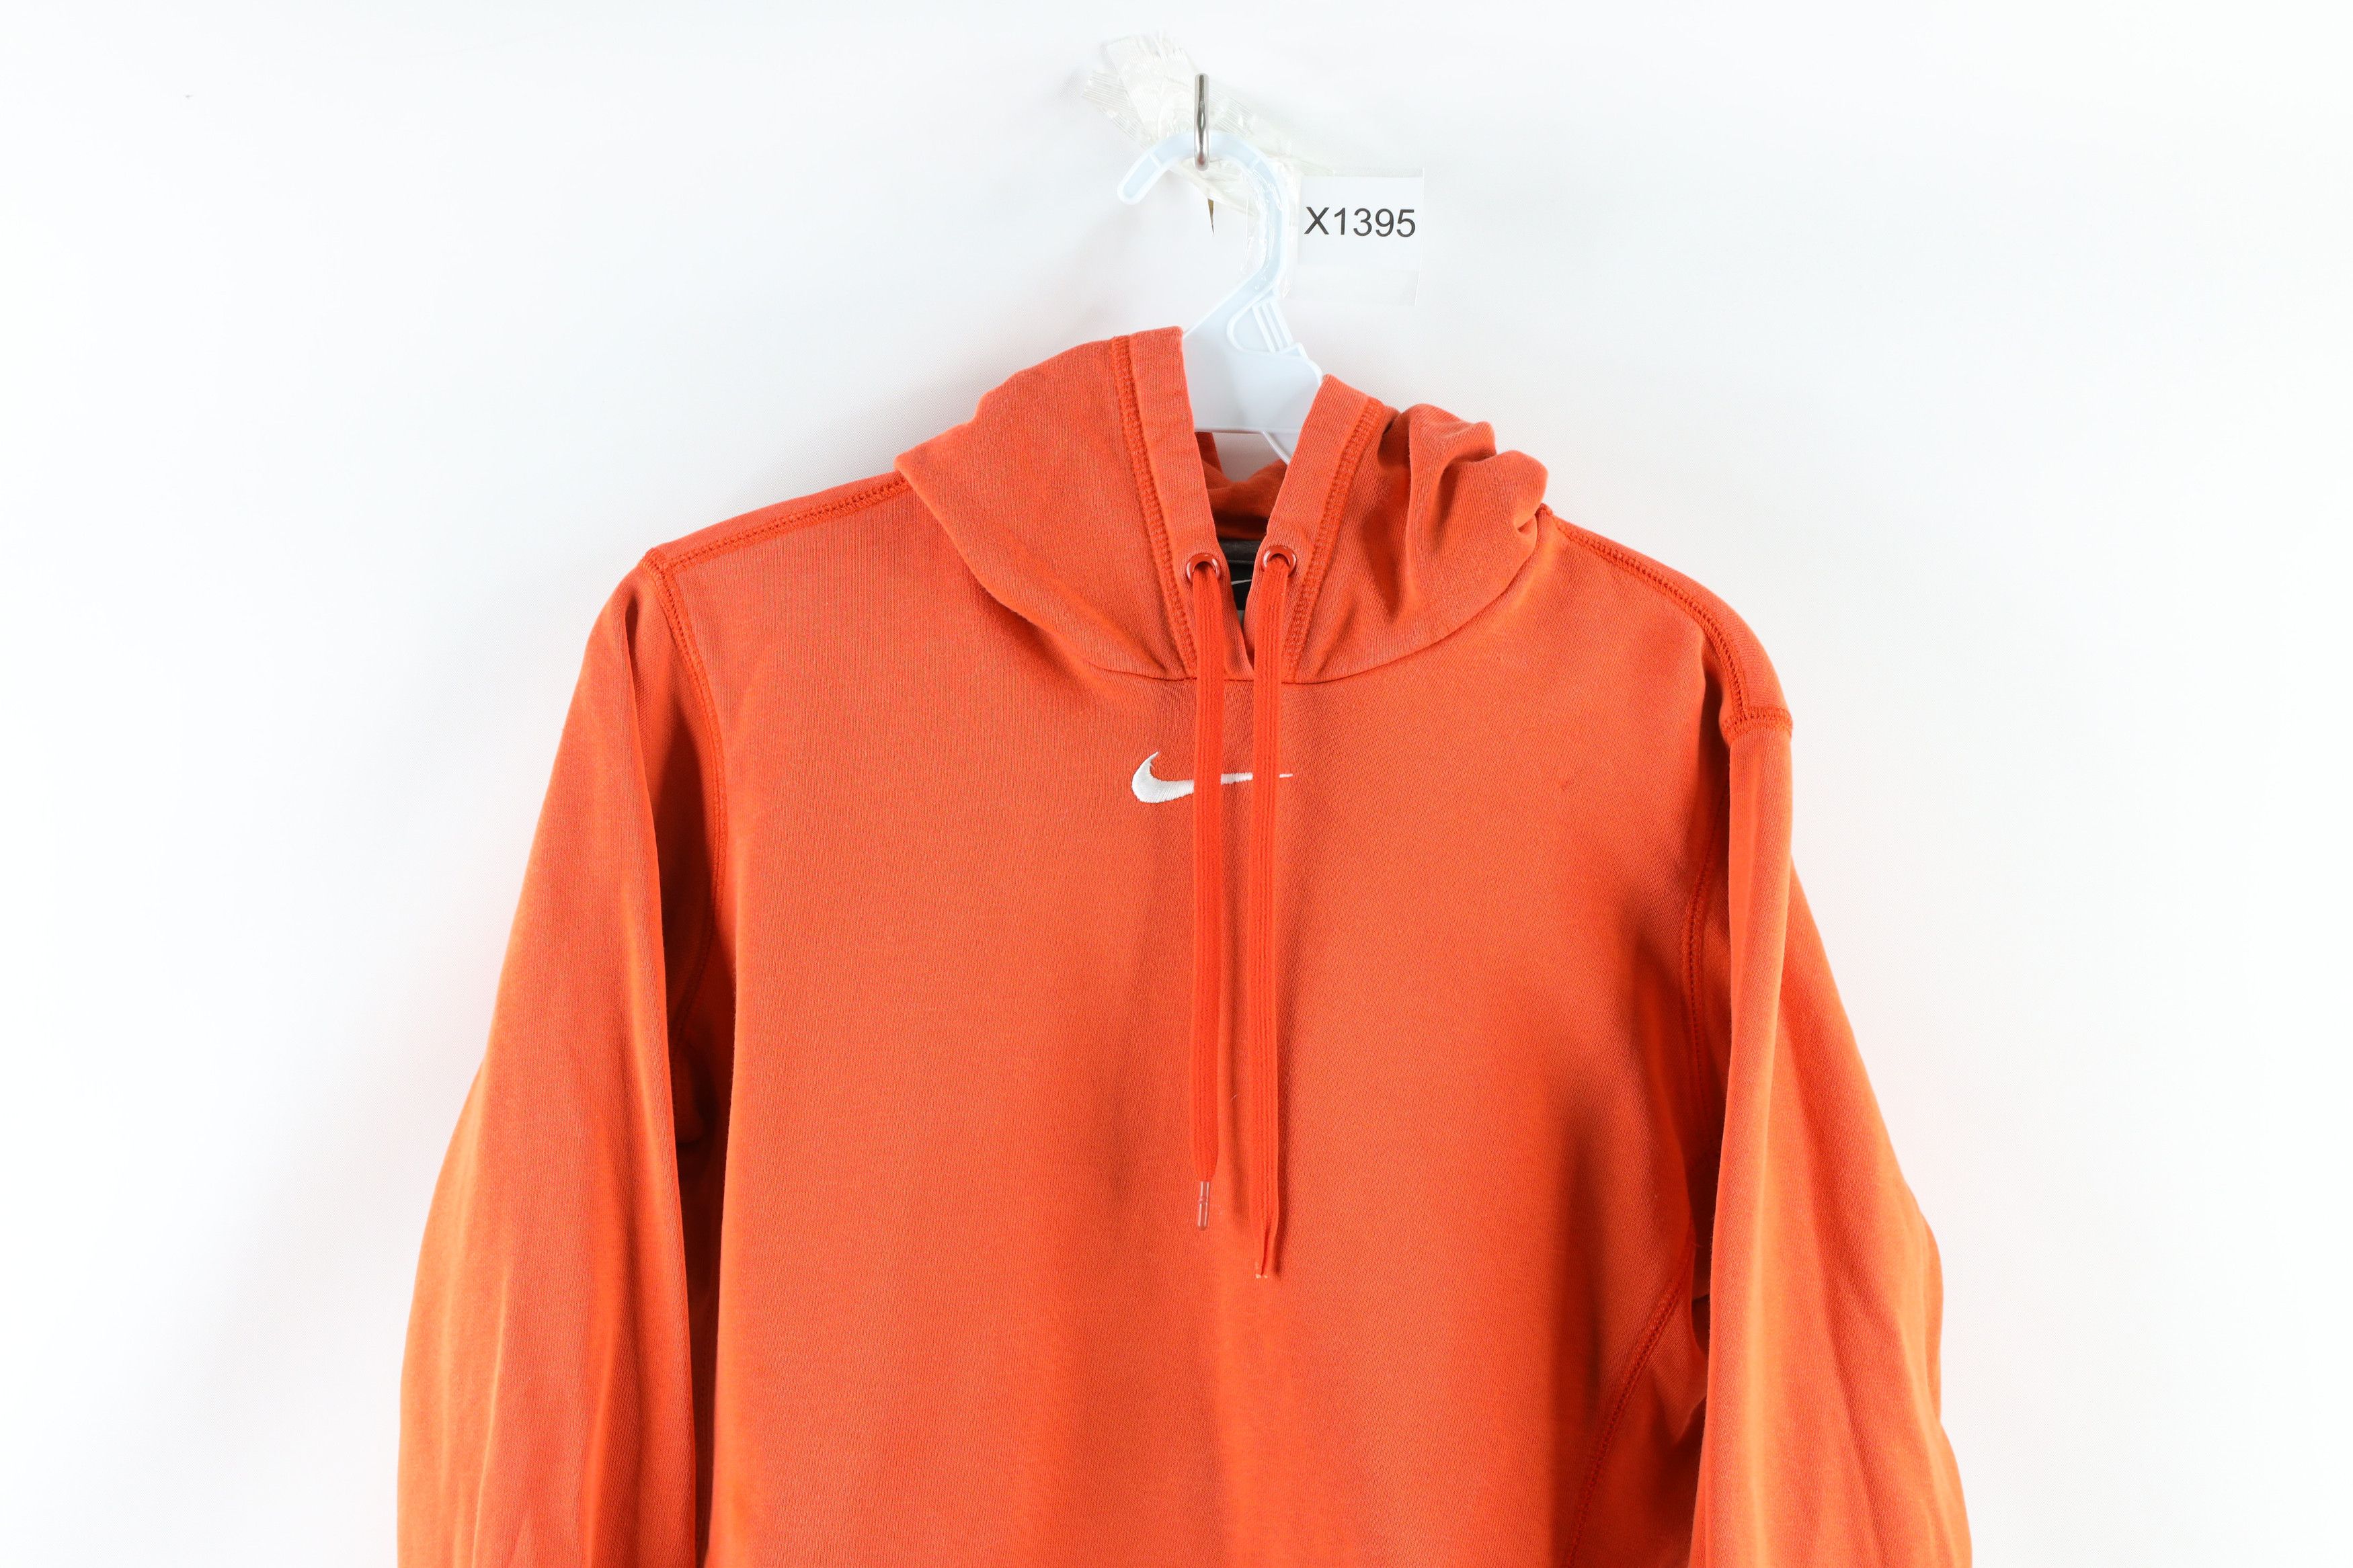 Nike Vintage Nike Travis Scott Swoosh Hoodie Sweatshirt Orange Size S / US 4 / IT 40 - 2 Preview